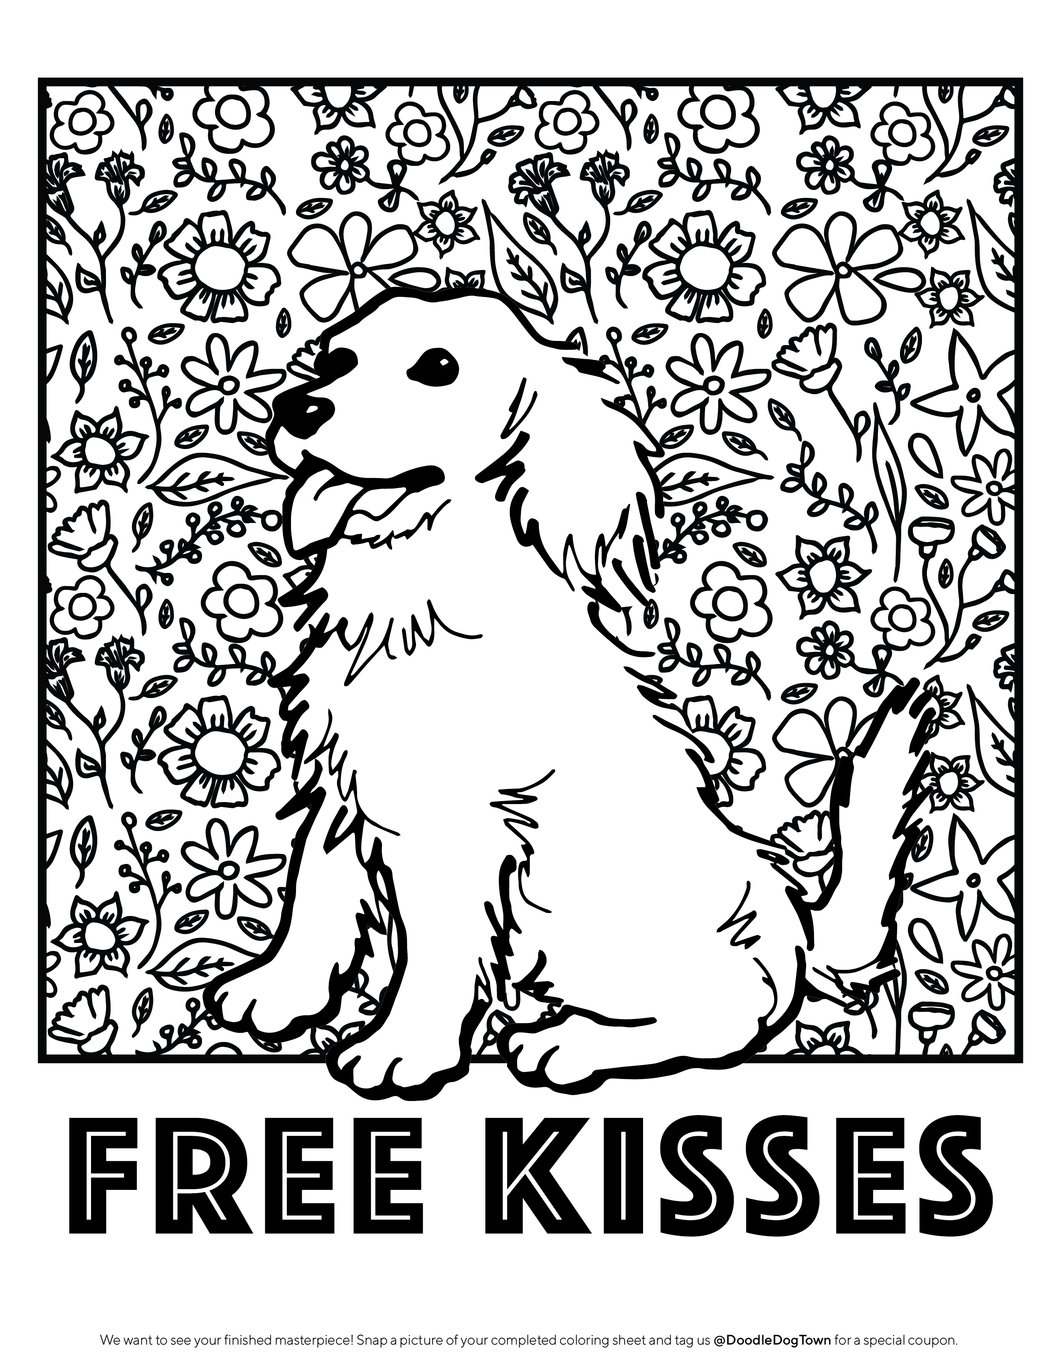 Free Kisses Coloring Sheet